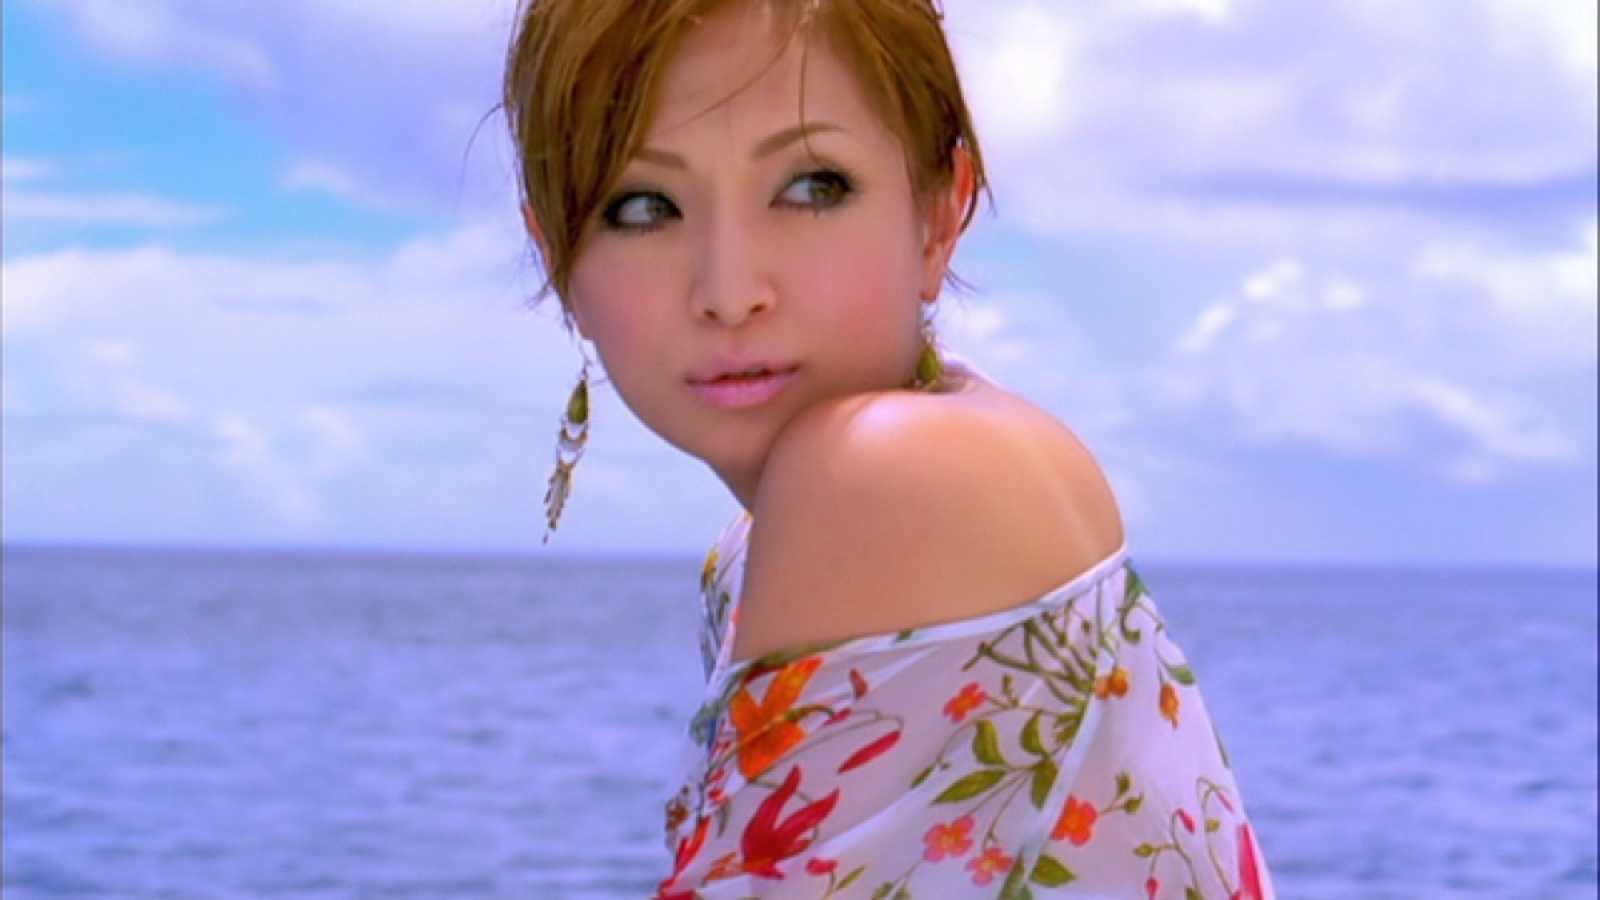 Tous les clips d'Ayumi Hamasaki débarquent sur YouTube © Ayumi Hamasaki - avex - All Rights Reserved